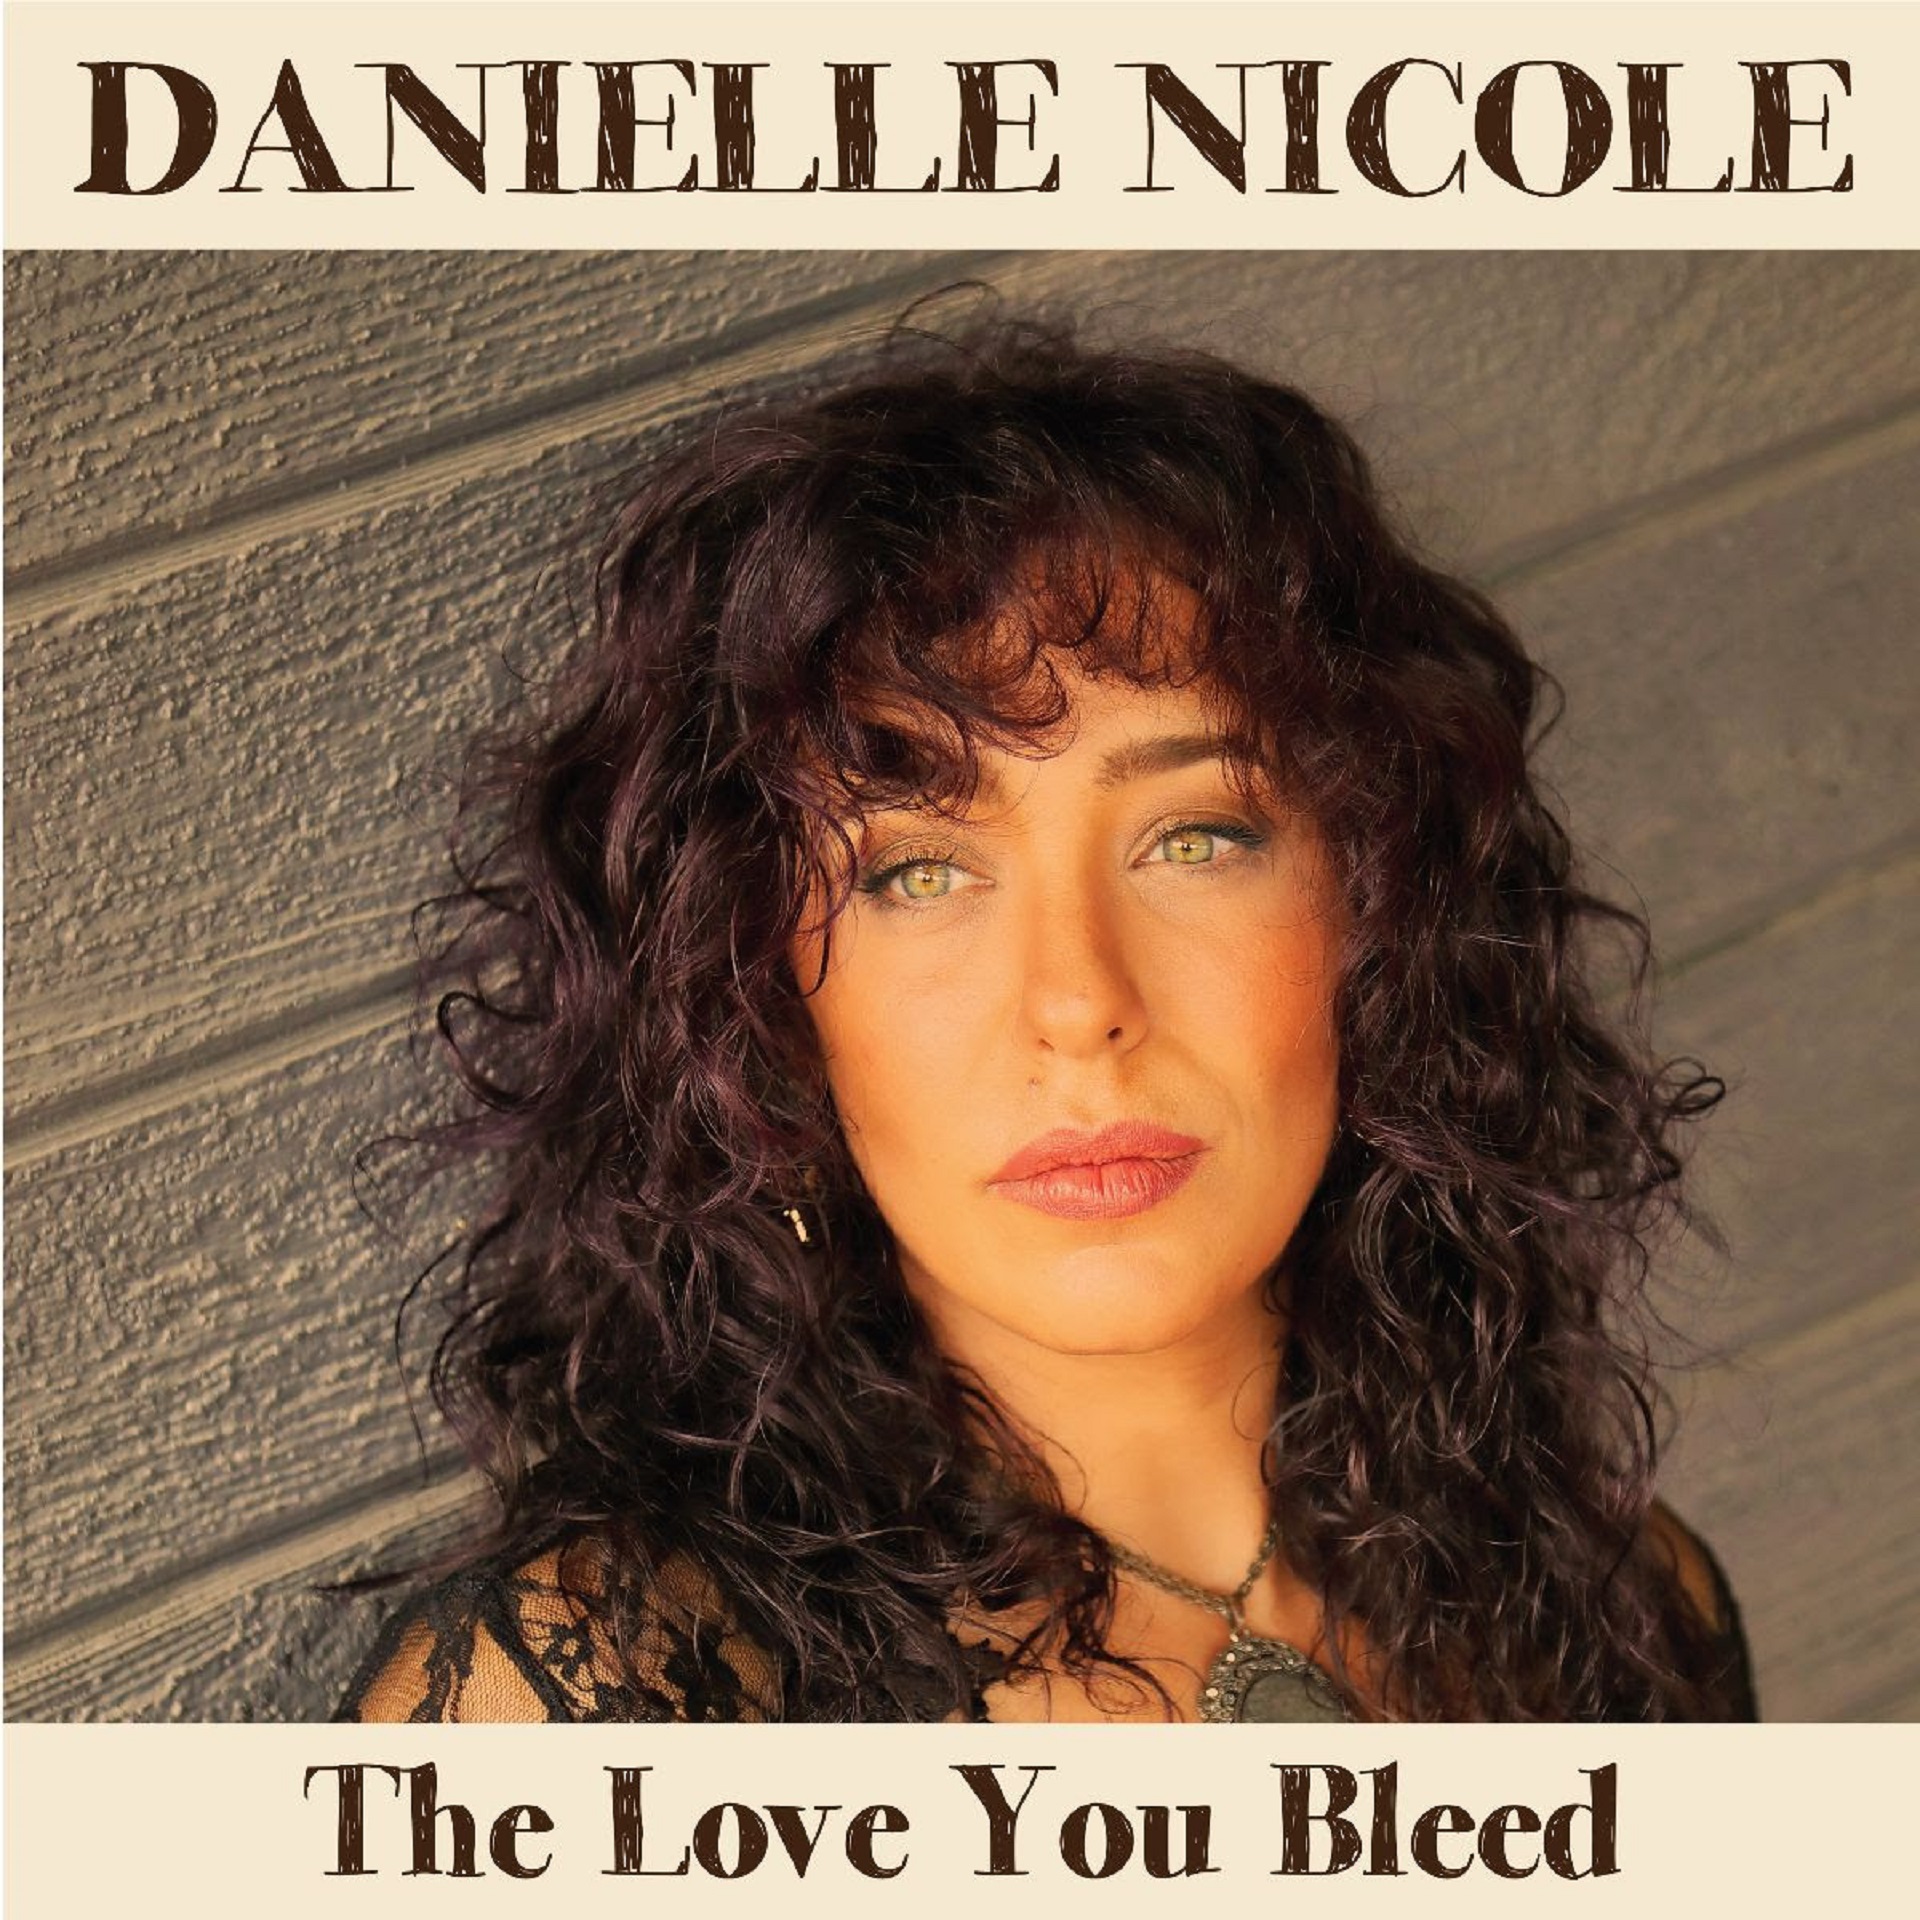 Grammy Nominated Musician Danielle Nicole Releases New Album